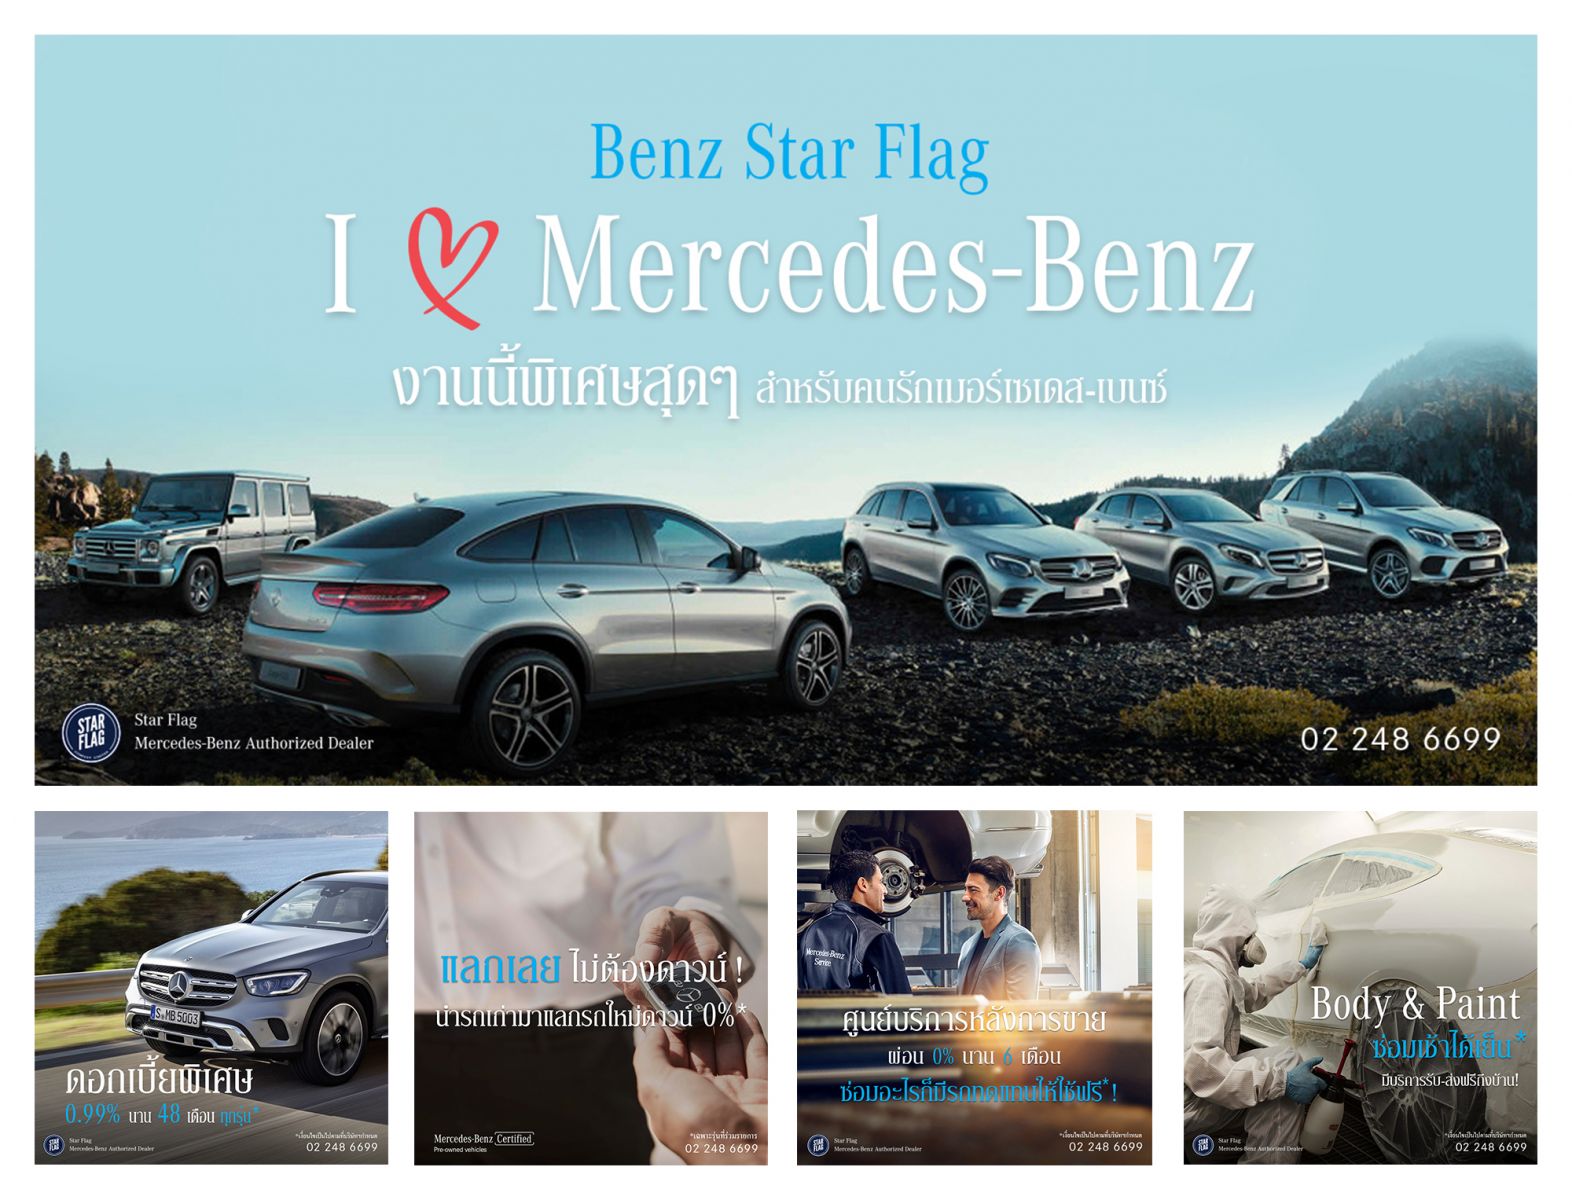 Benz Star Flag